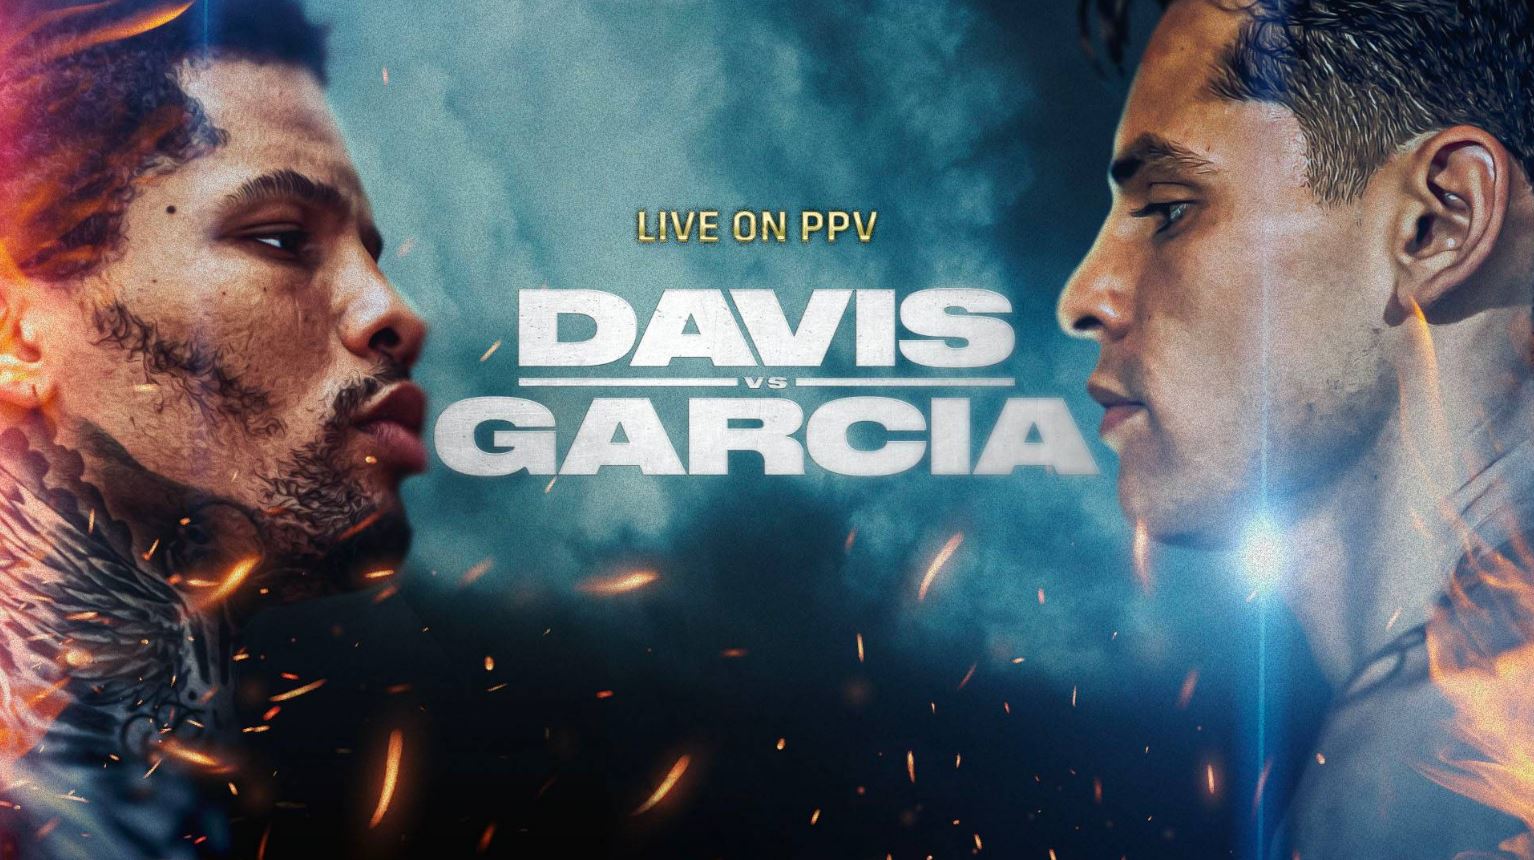 Davis and Garcia stare down in a PPV promo poster.